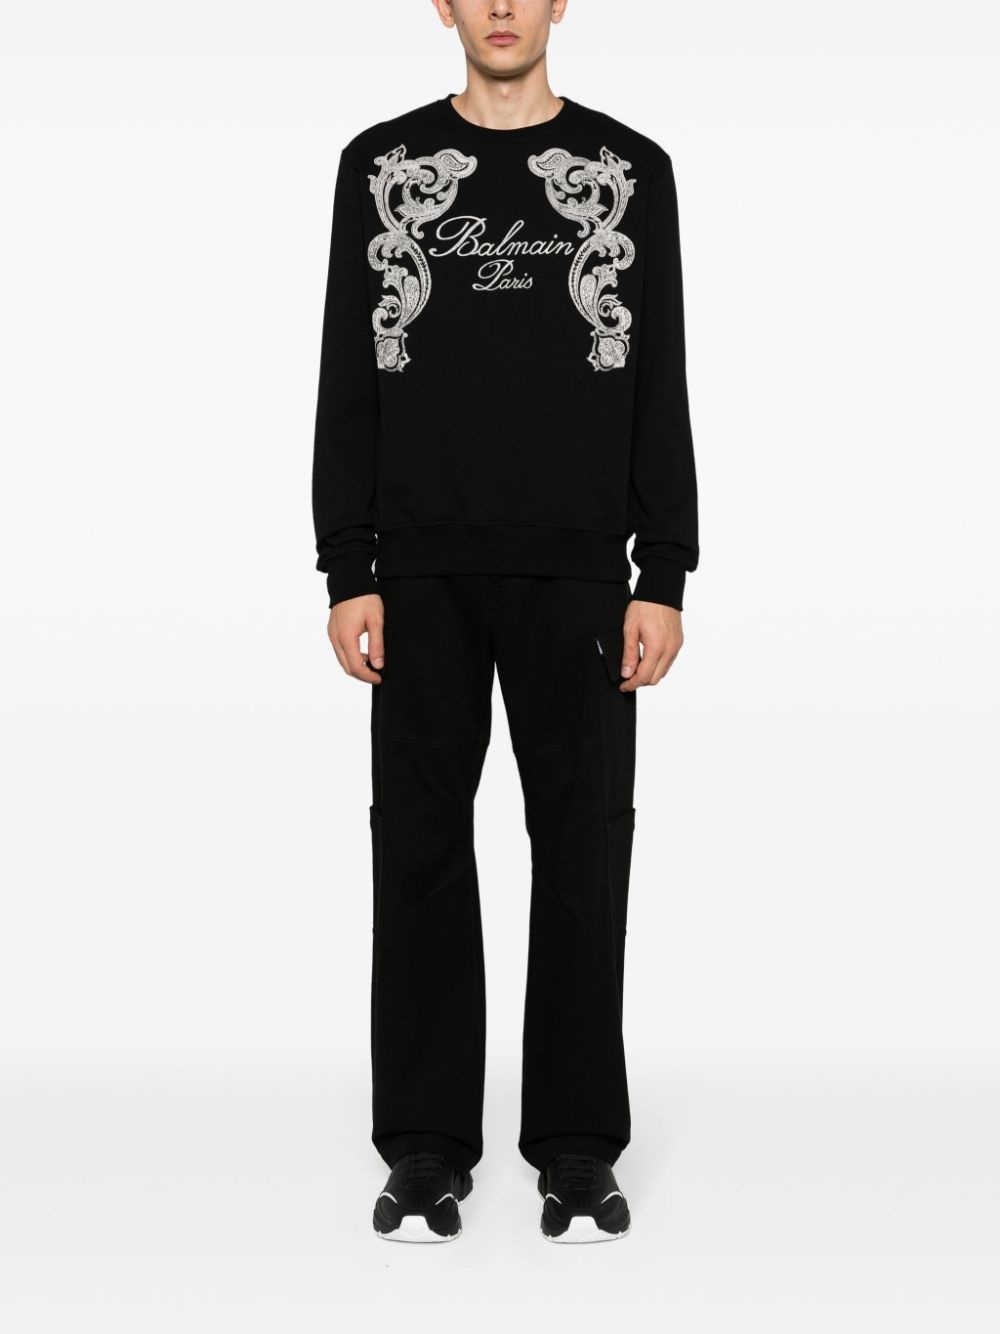 Balmain Paris cotton sweatshirt - Black